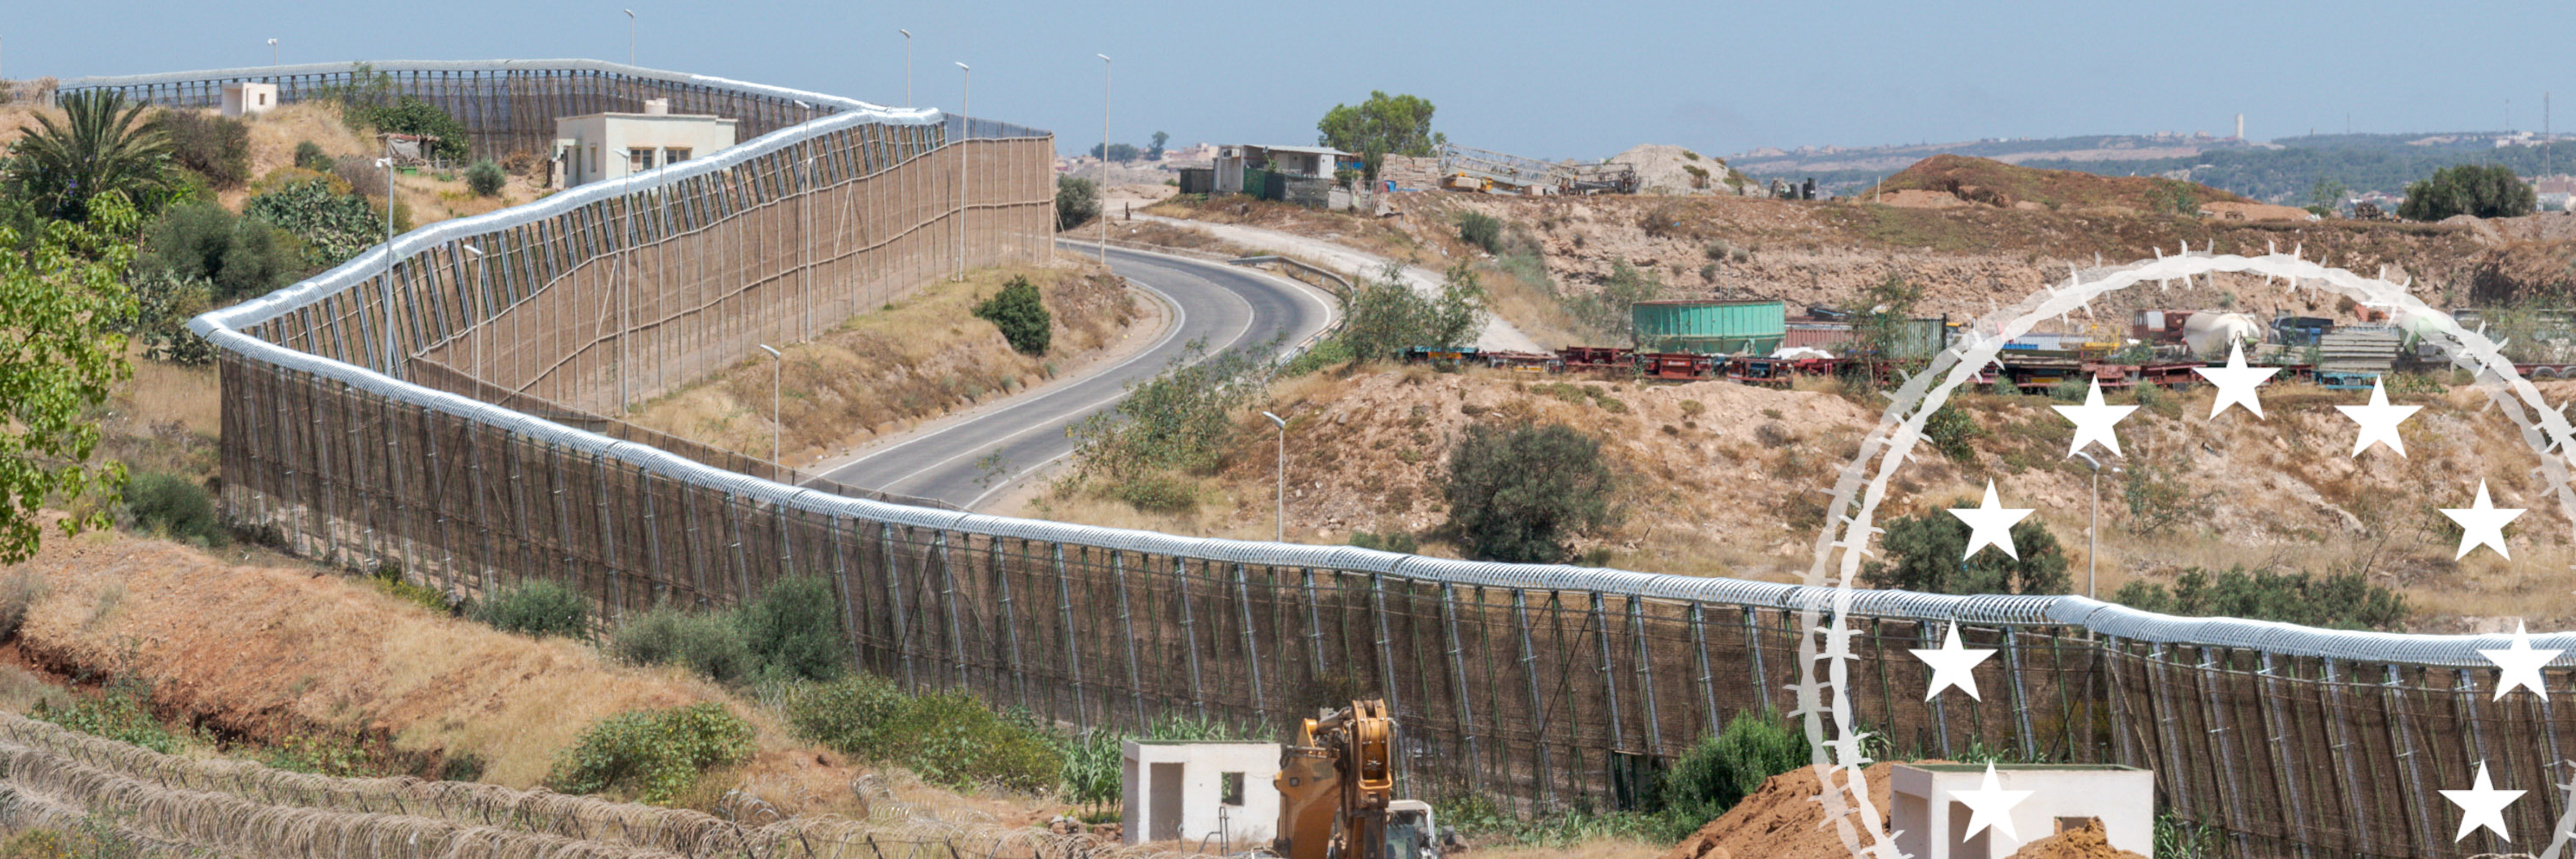 June 29, 2022, Nador, Morocco: View of the border between Nador and Melilla.